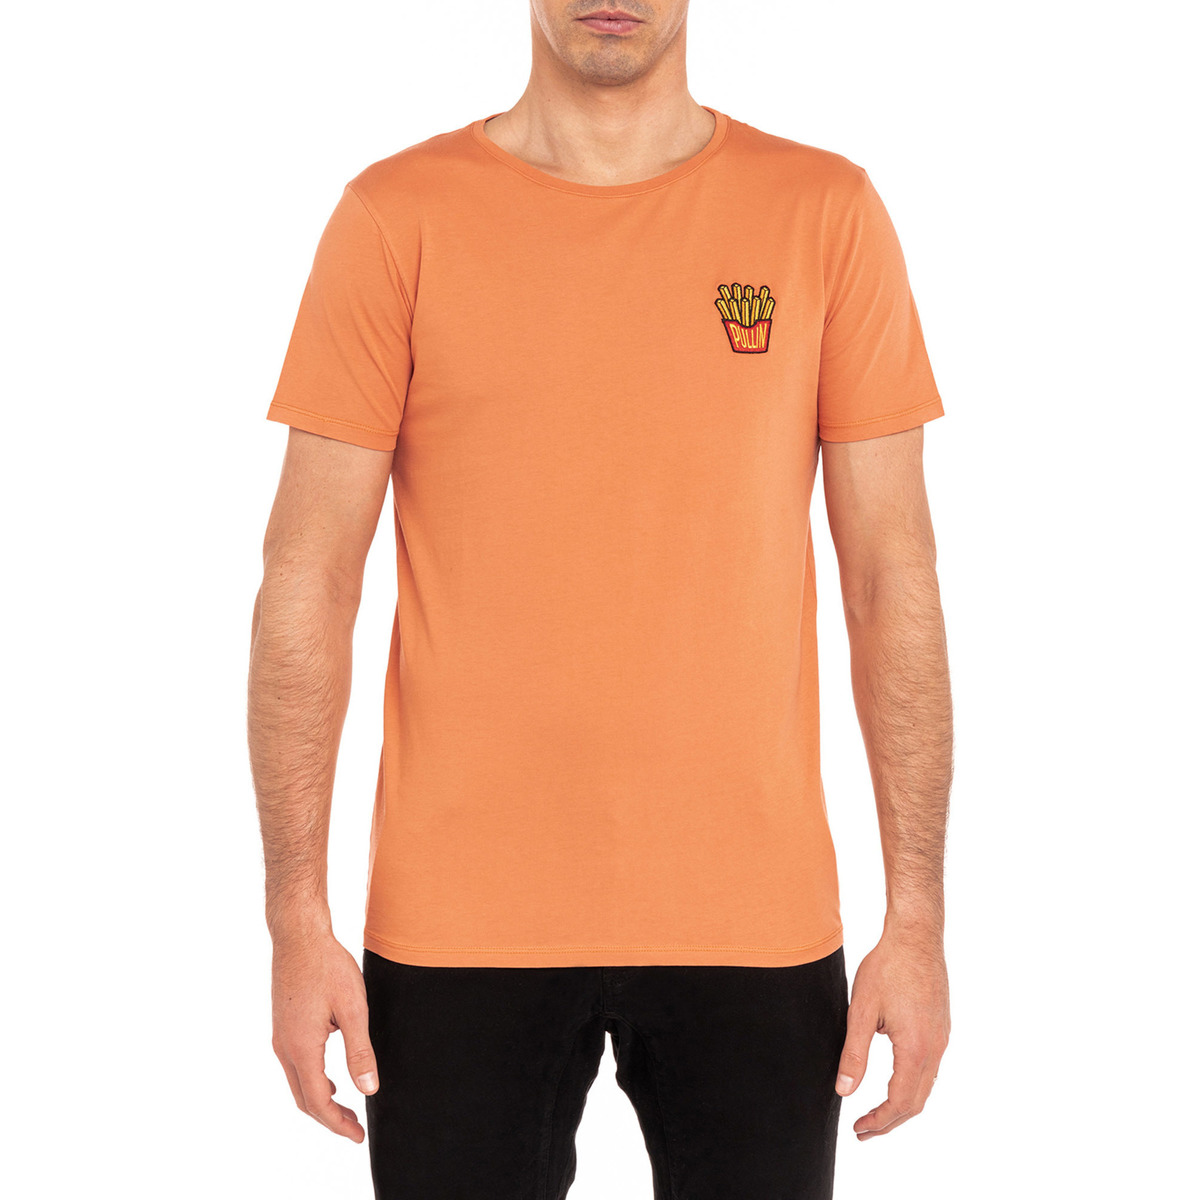 Vêtements Homme adidas y 3 men 3 stripes wool jacket black adcf Pullin T-shirt  PATCHFRIES Orange